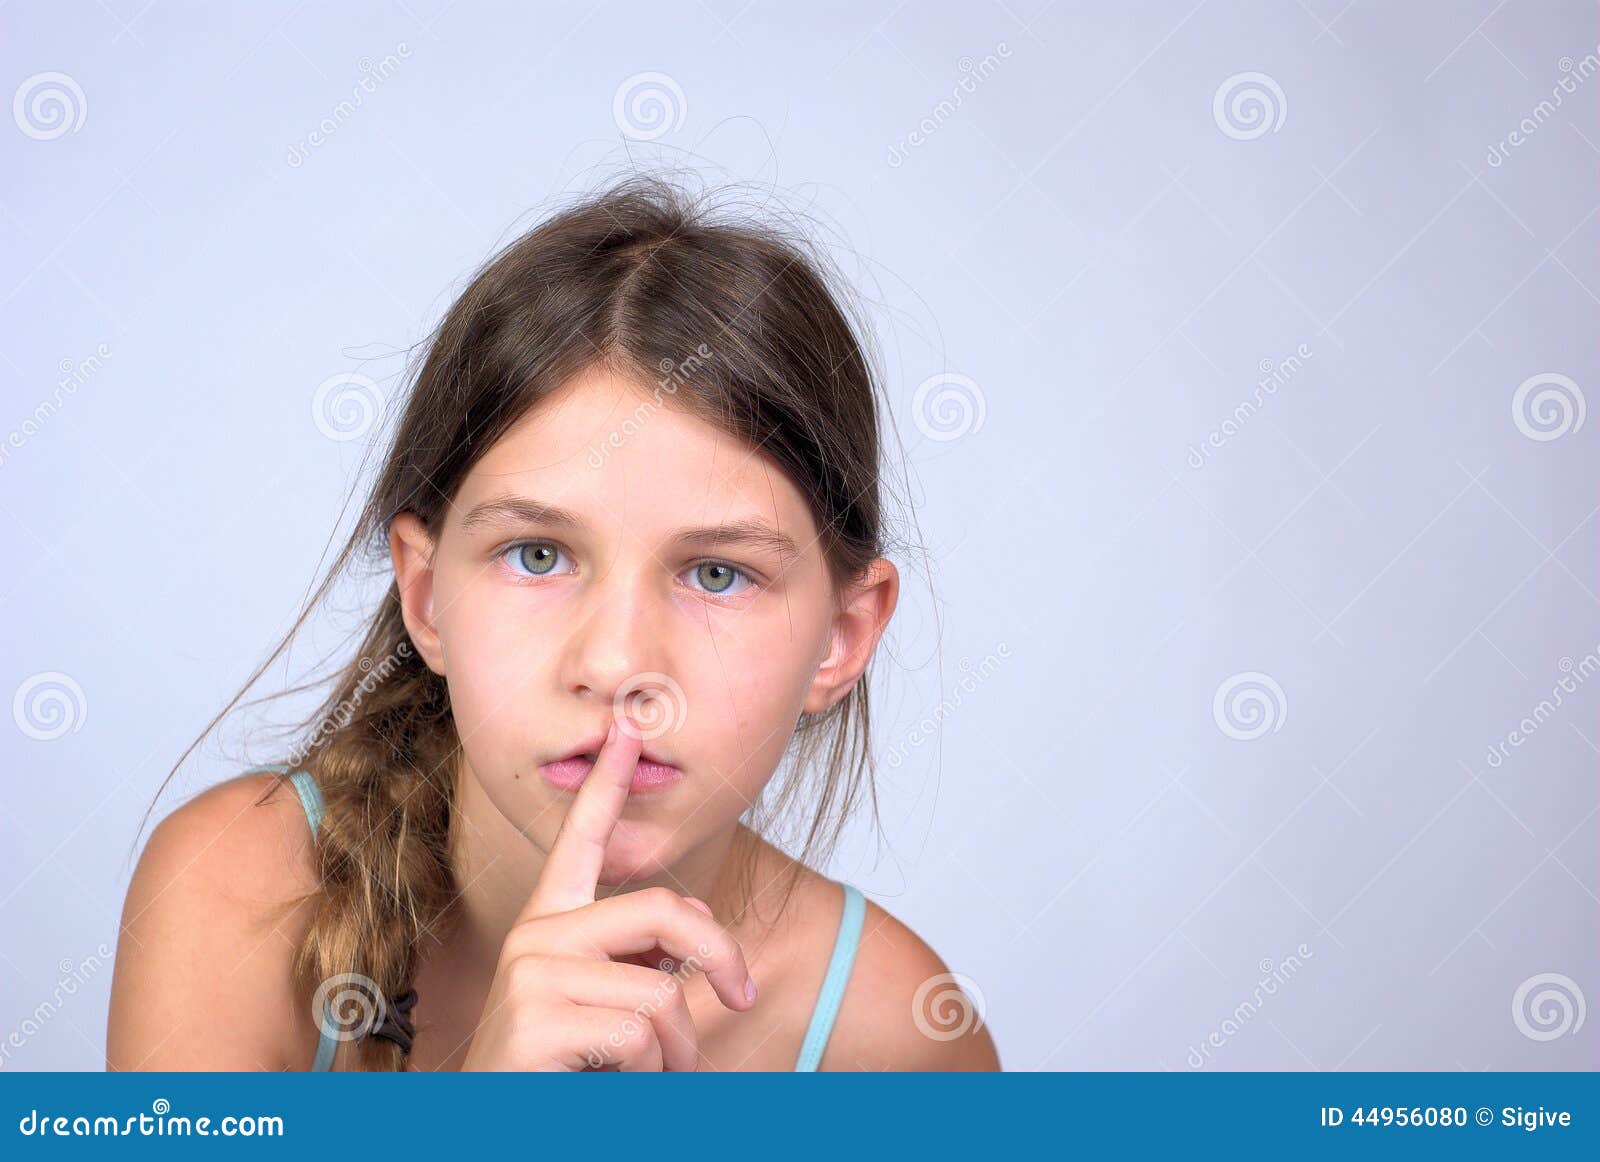 Young Girl With Finger On Lips Shushing Stock Photo Image